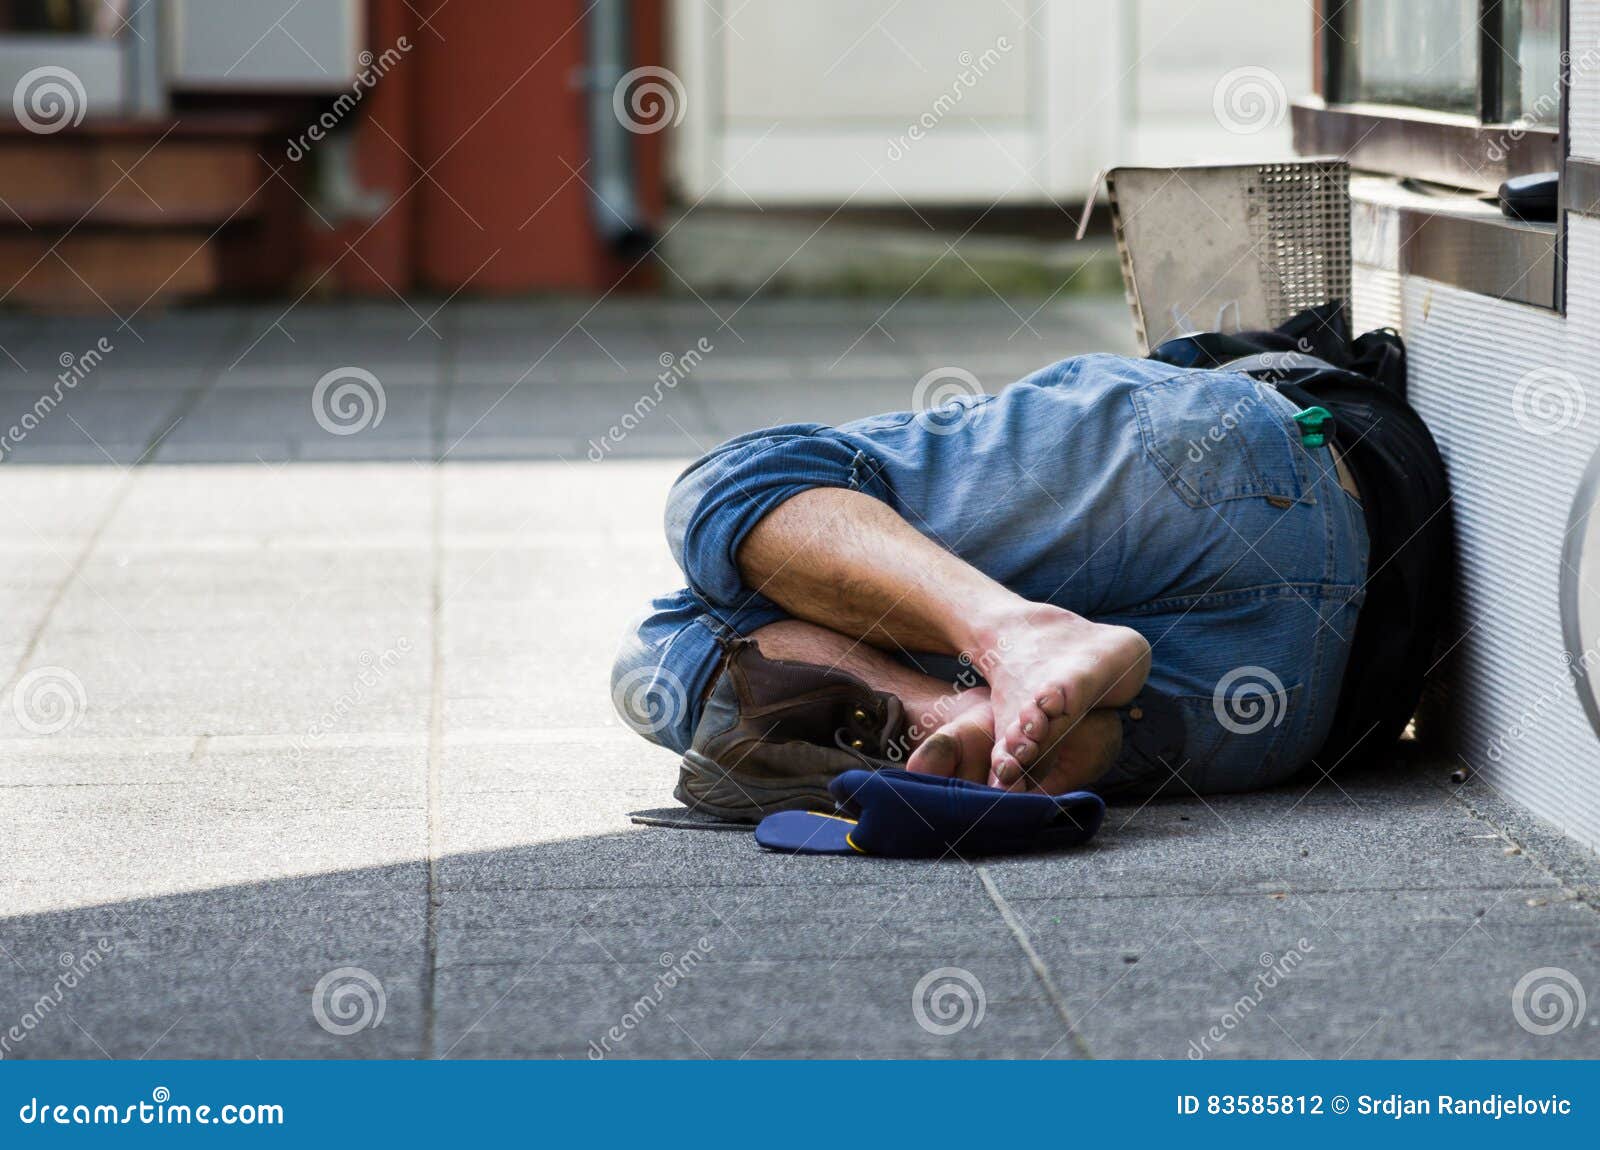 homeless man sleeps on the street, in the shadow